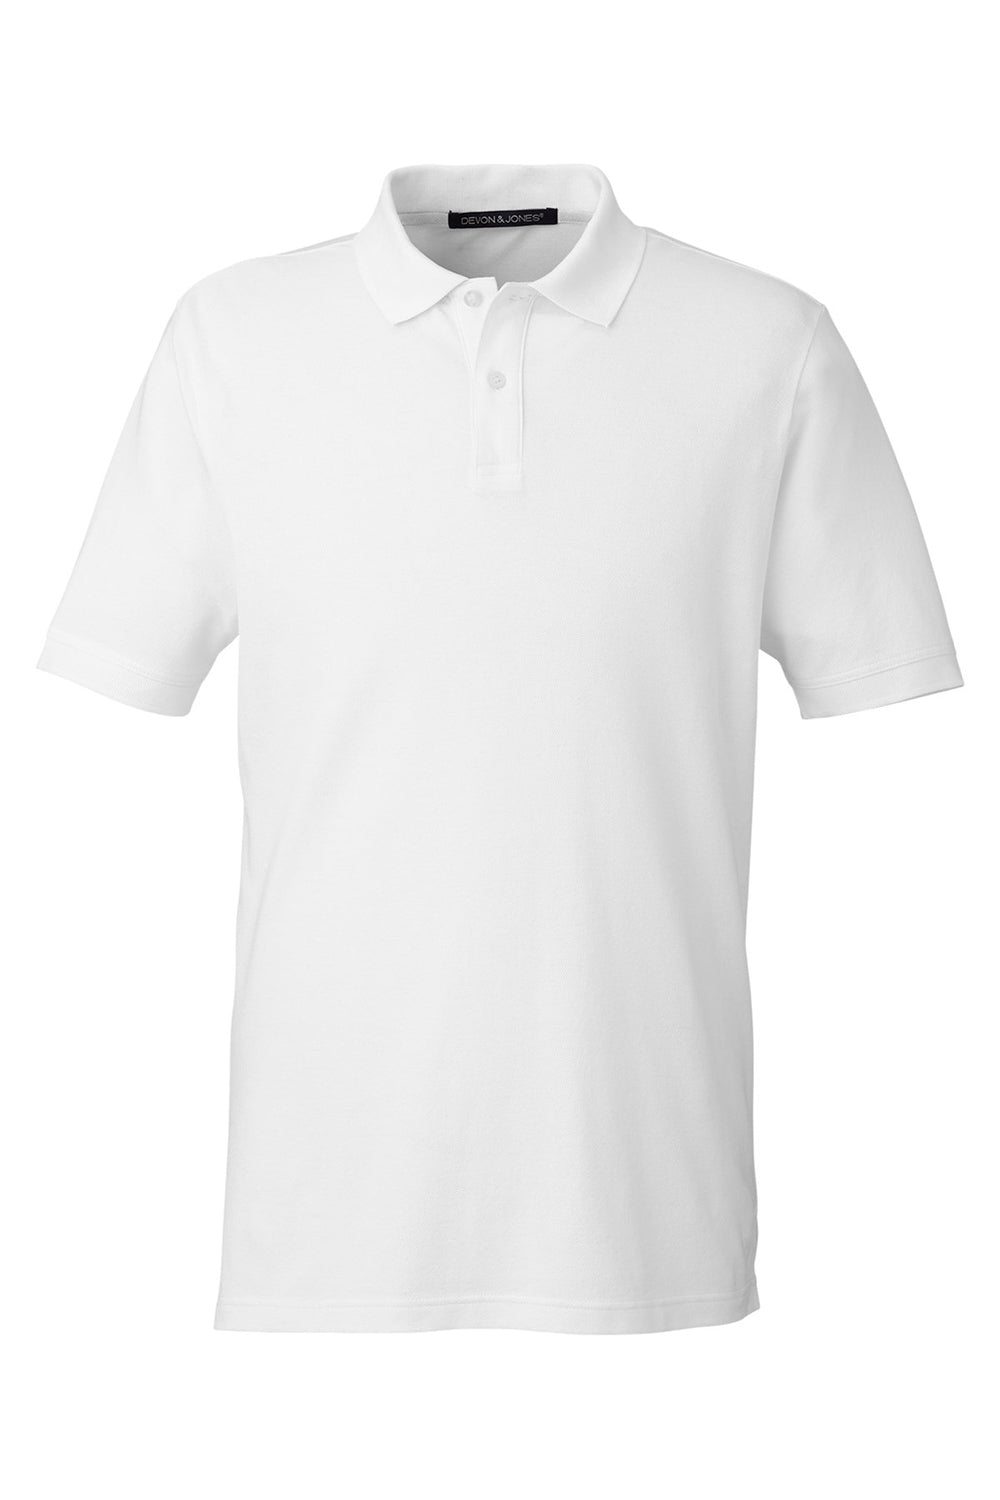 Devon & Jones DG100 Mens New Classics Performance Moisture Wicking Short Sleeve Polo Shirt White Flat Front